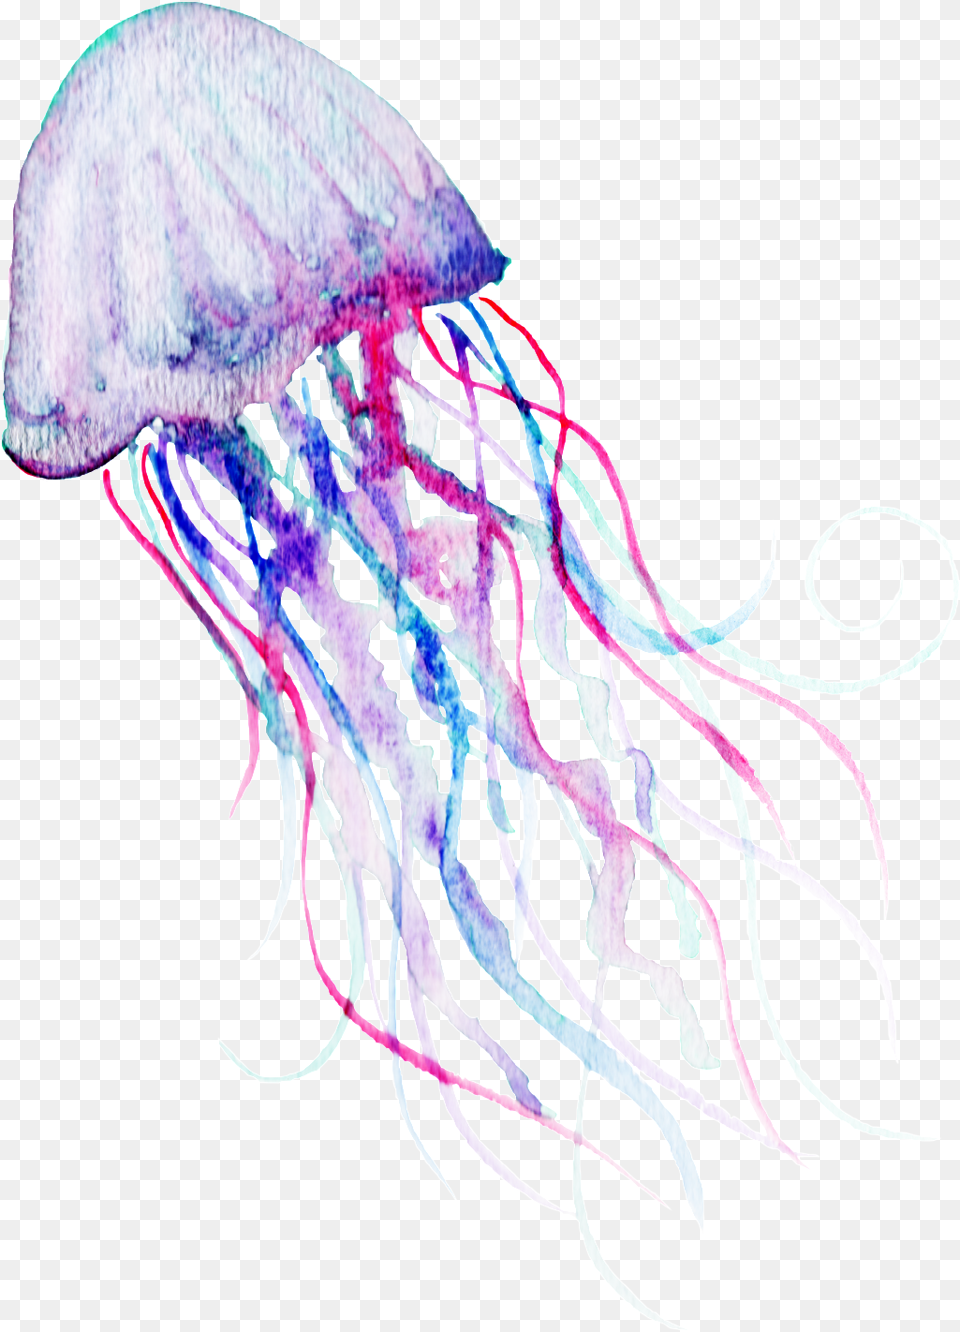 Download Hd Watercolor Deep Sea Jelly, Animal, Sea Life, Invertebrate, Jellyfish Free Transparent Png